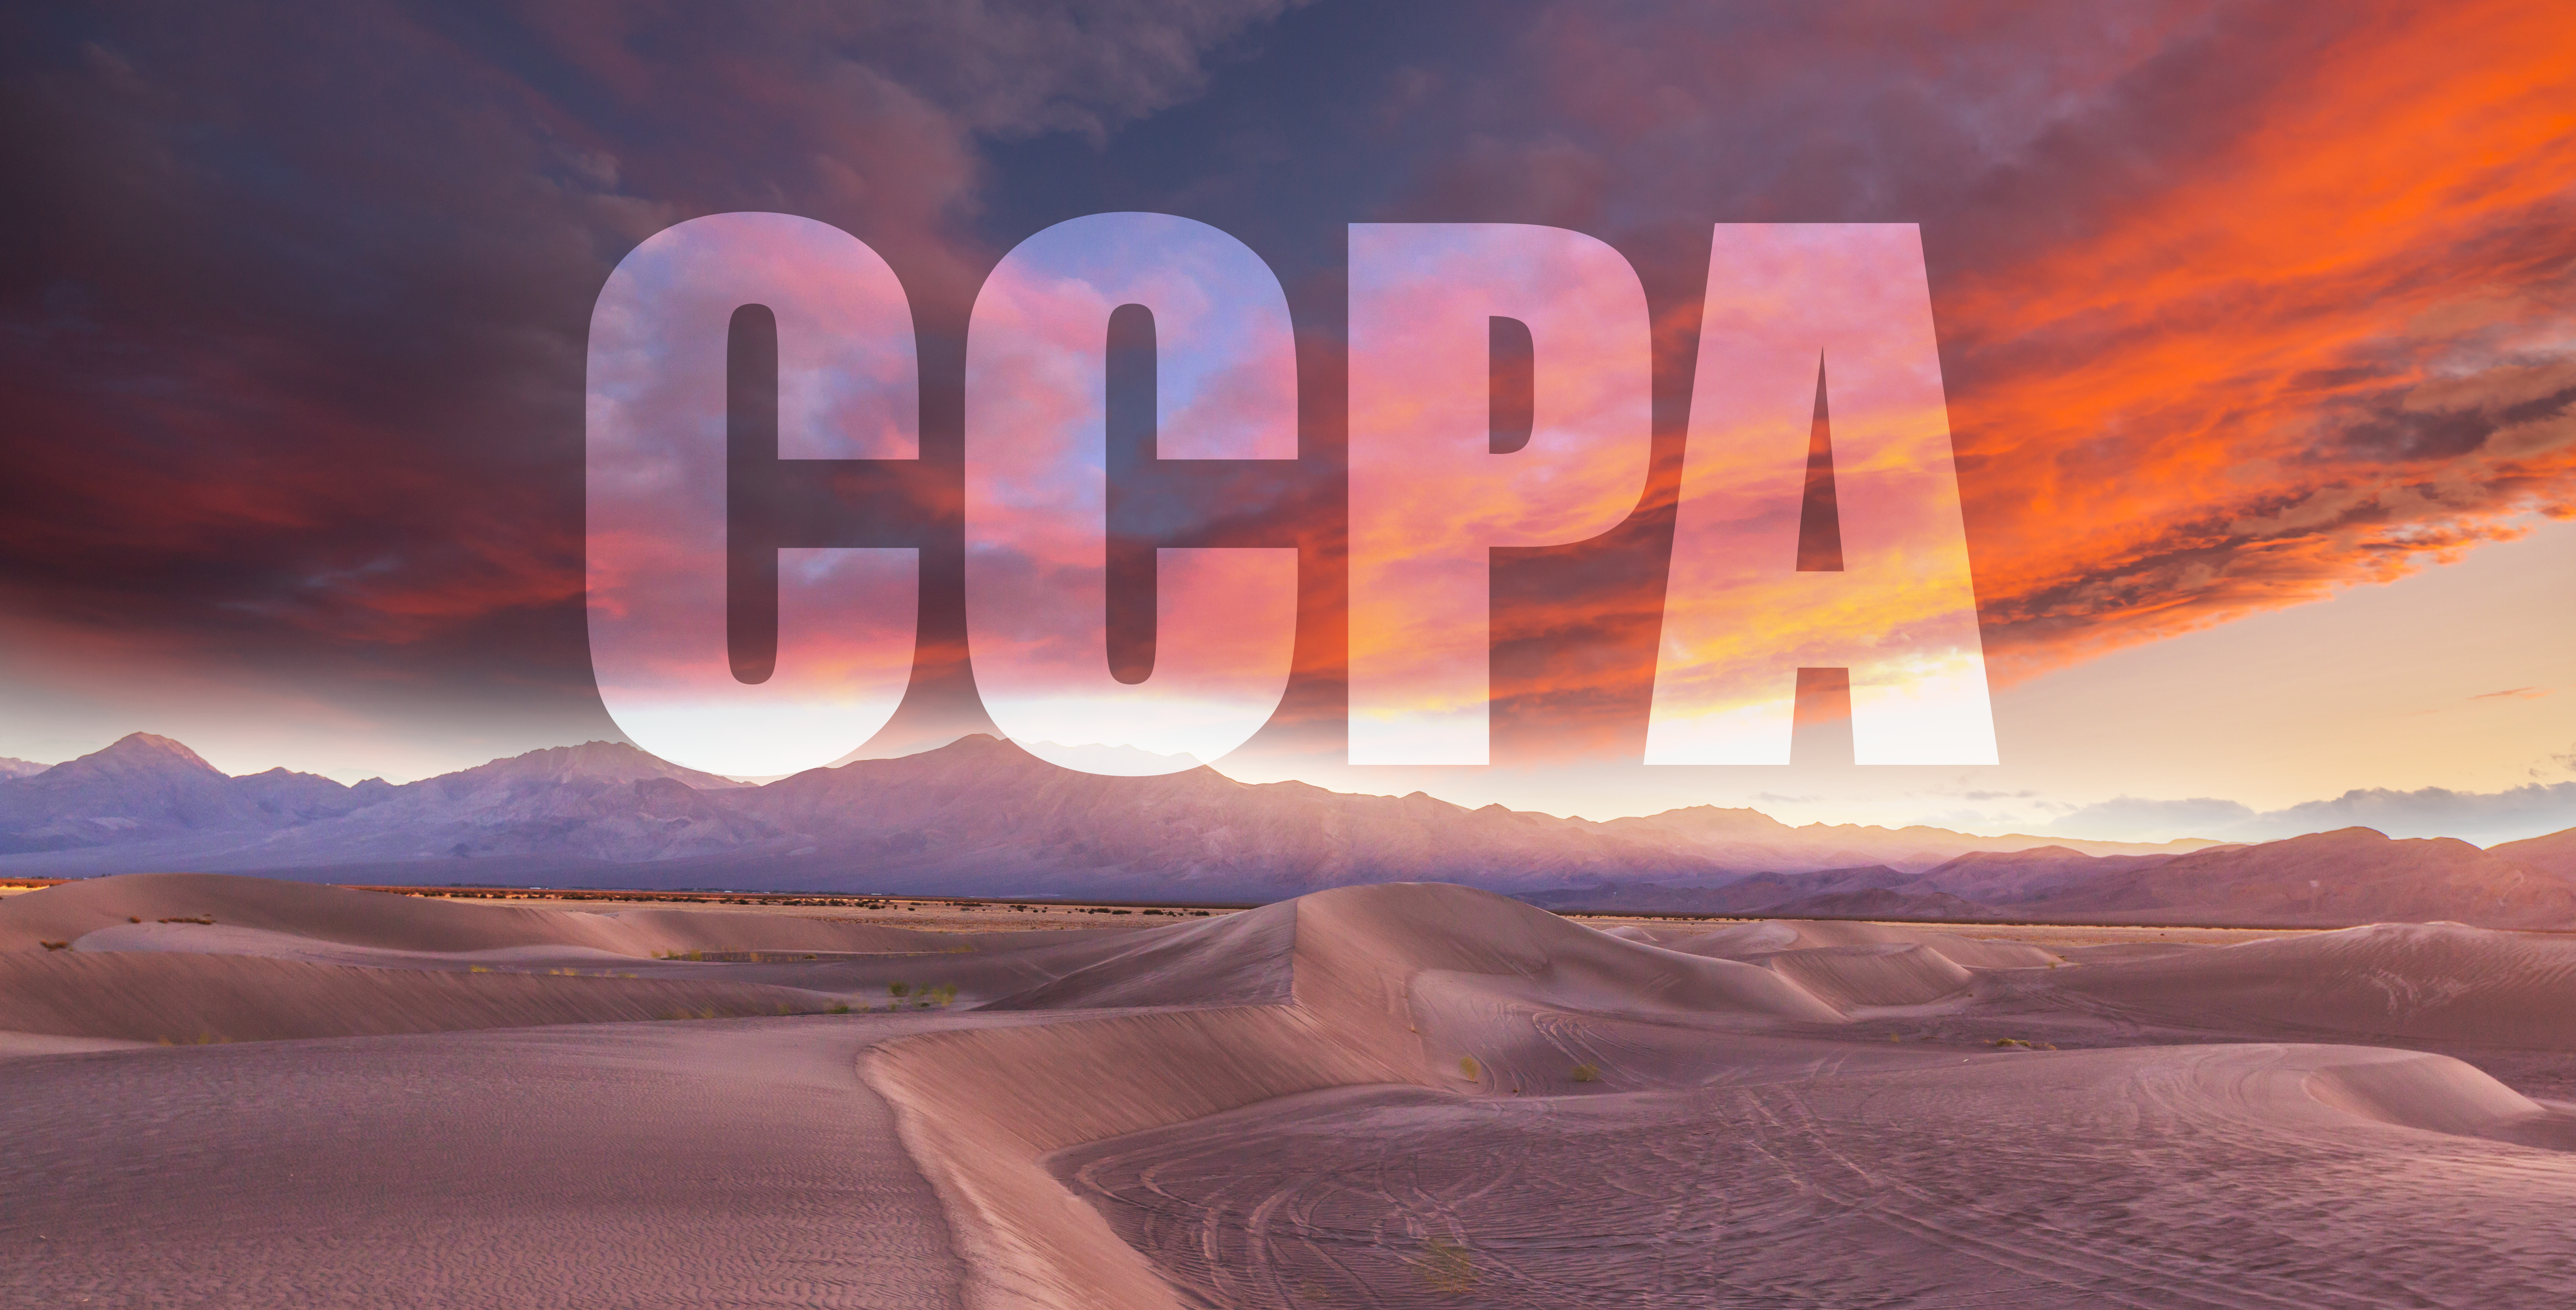 CCPA Dunes